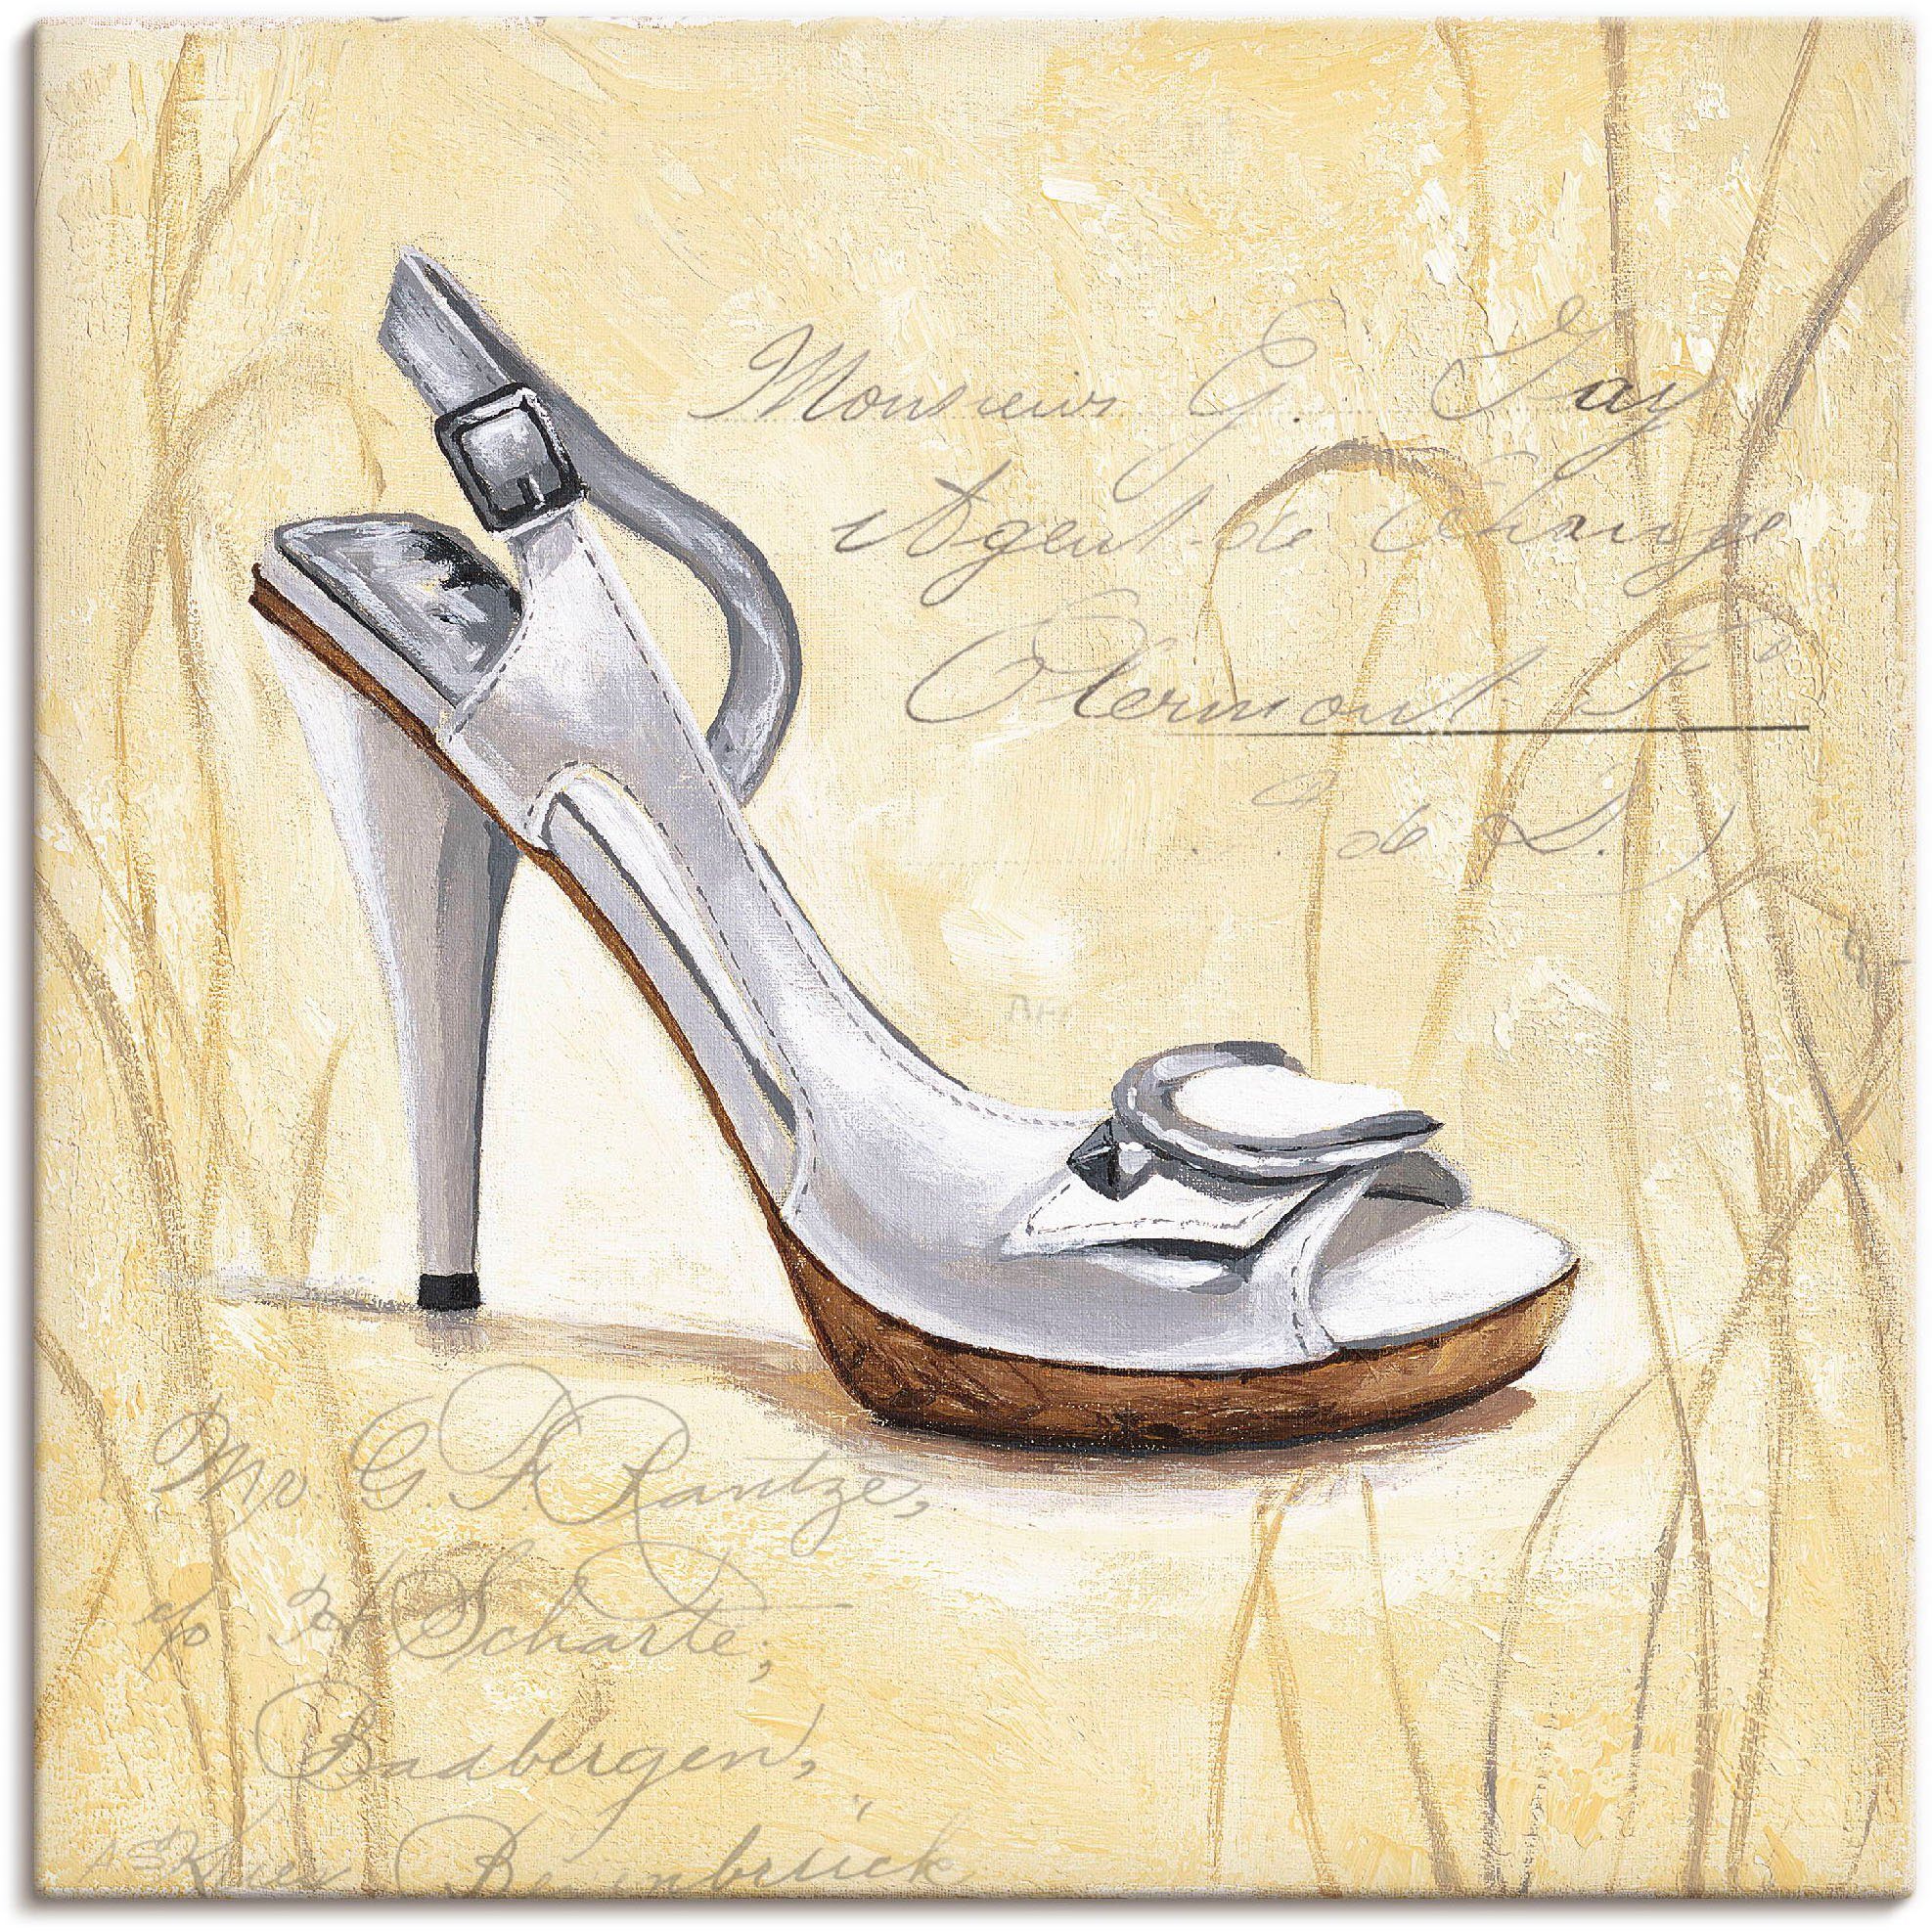 Artland Artprint Stiletto's IV - schoenen in vele afmetingen & productsoorten - artprint van aluminium / artprint voor buiten, artprint op linnen, poster, muursticker / wandfolie o